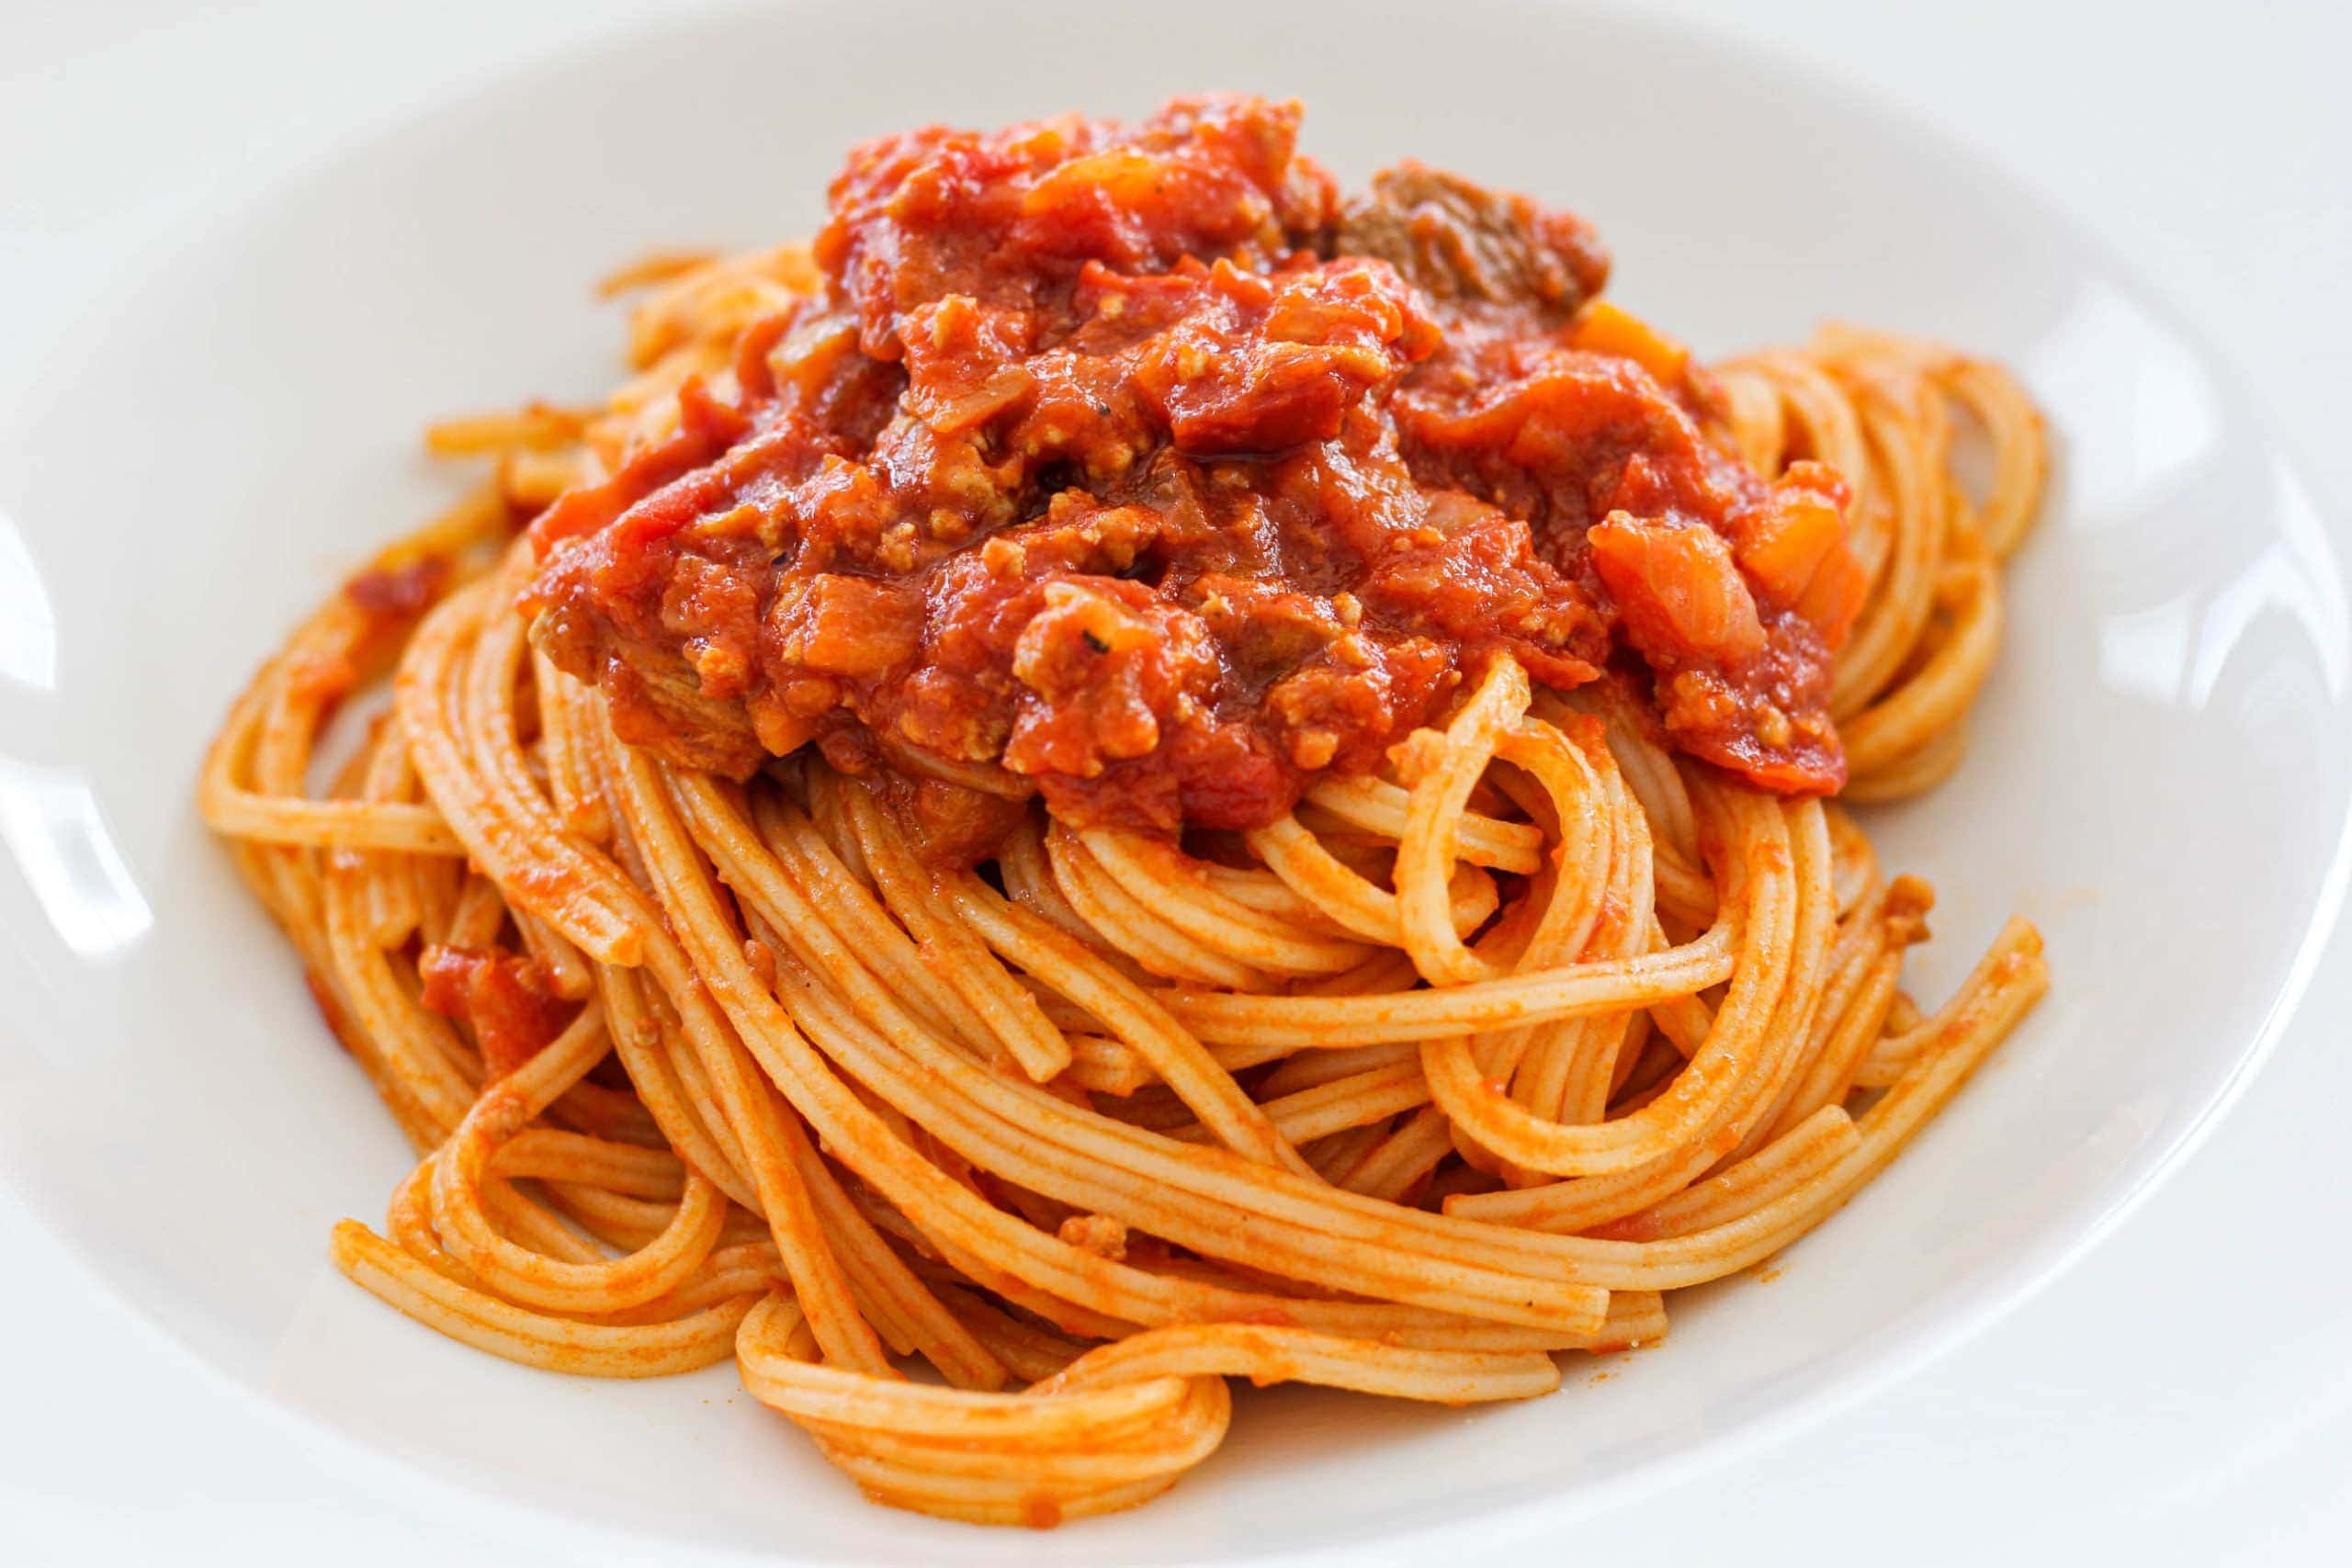 https://www.nonnabox.com/wp-content/uploads/2020/07/Spaghetti_Alla_Chitarra_with_Pork_and_Lamb_sauce_closeup-scaled.jpg